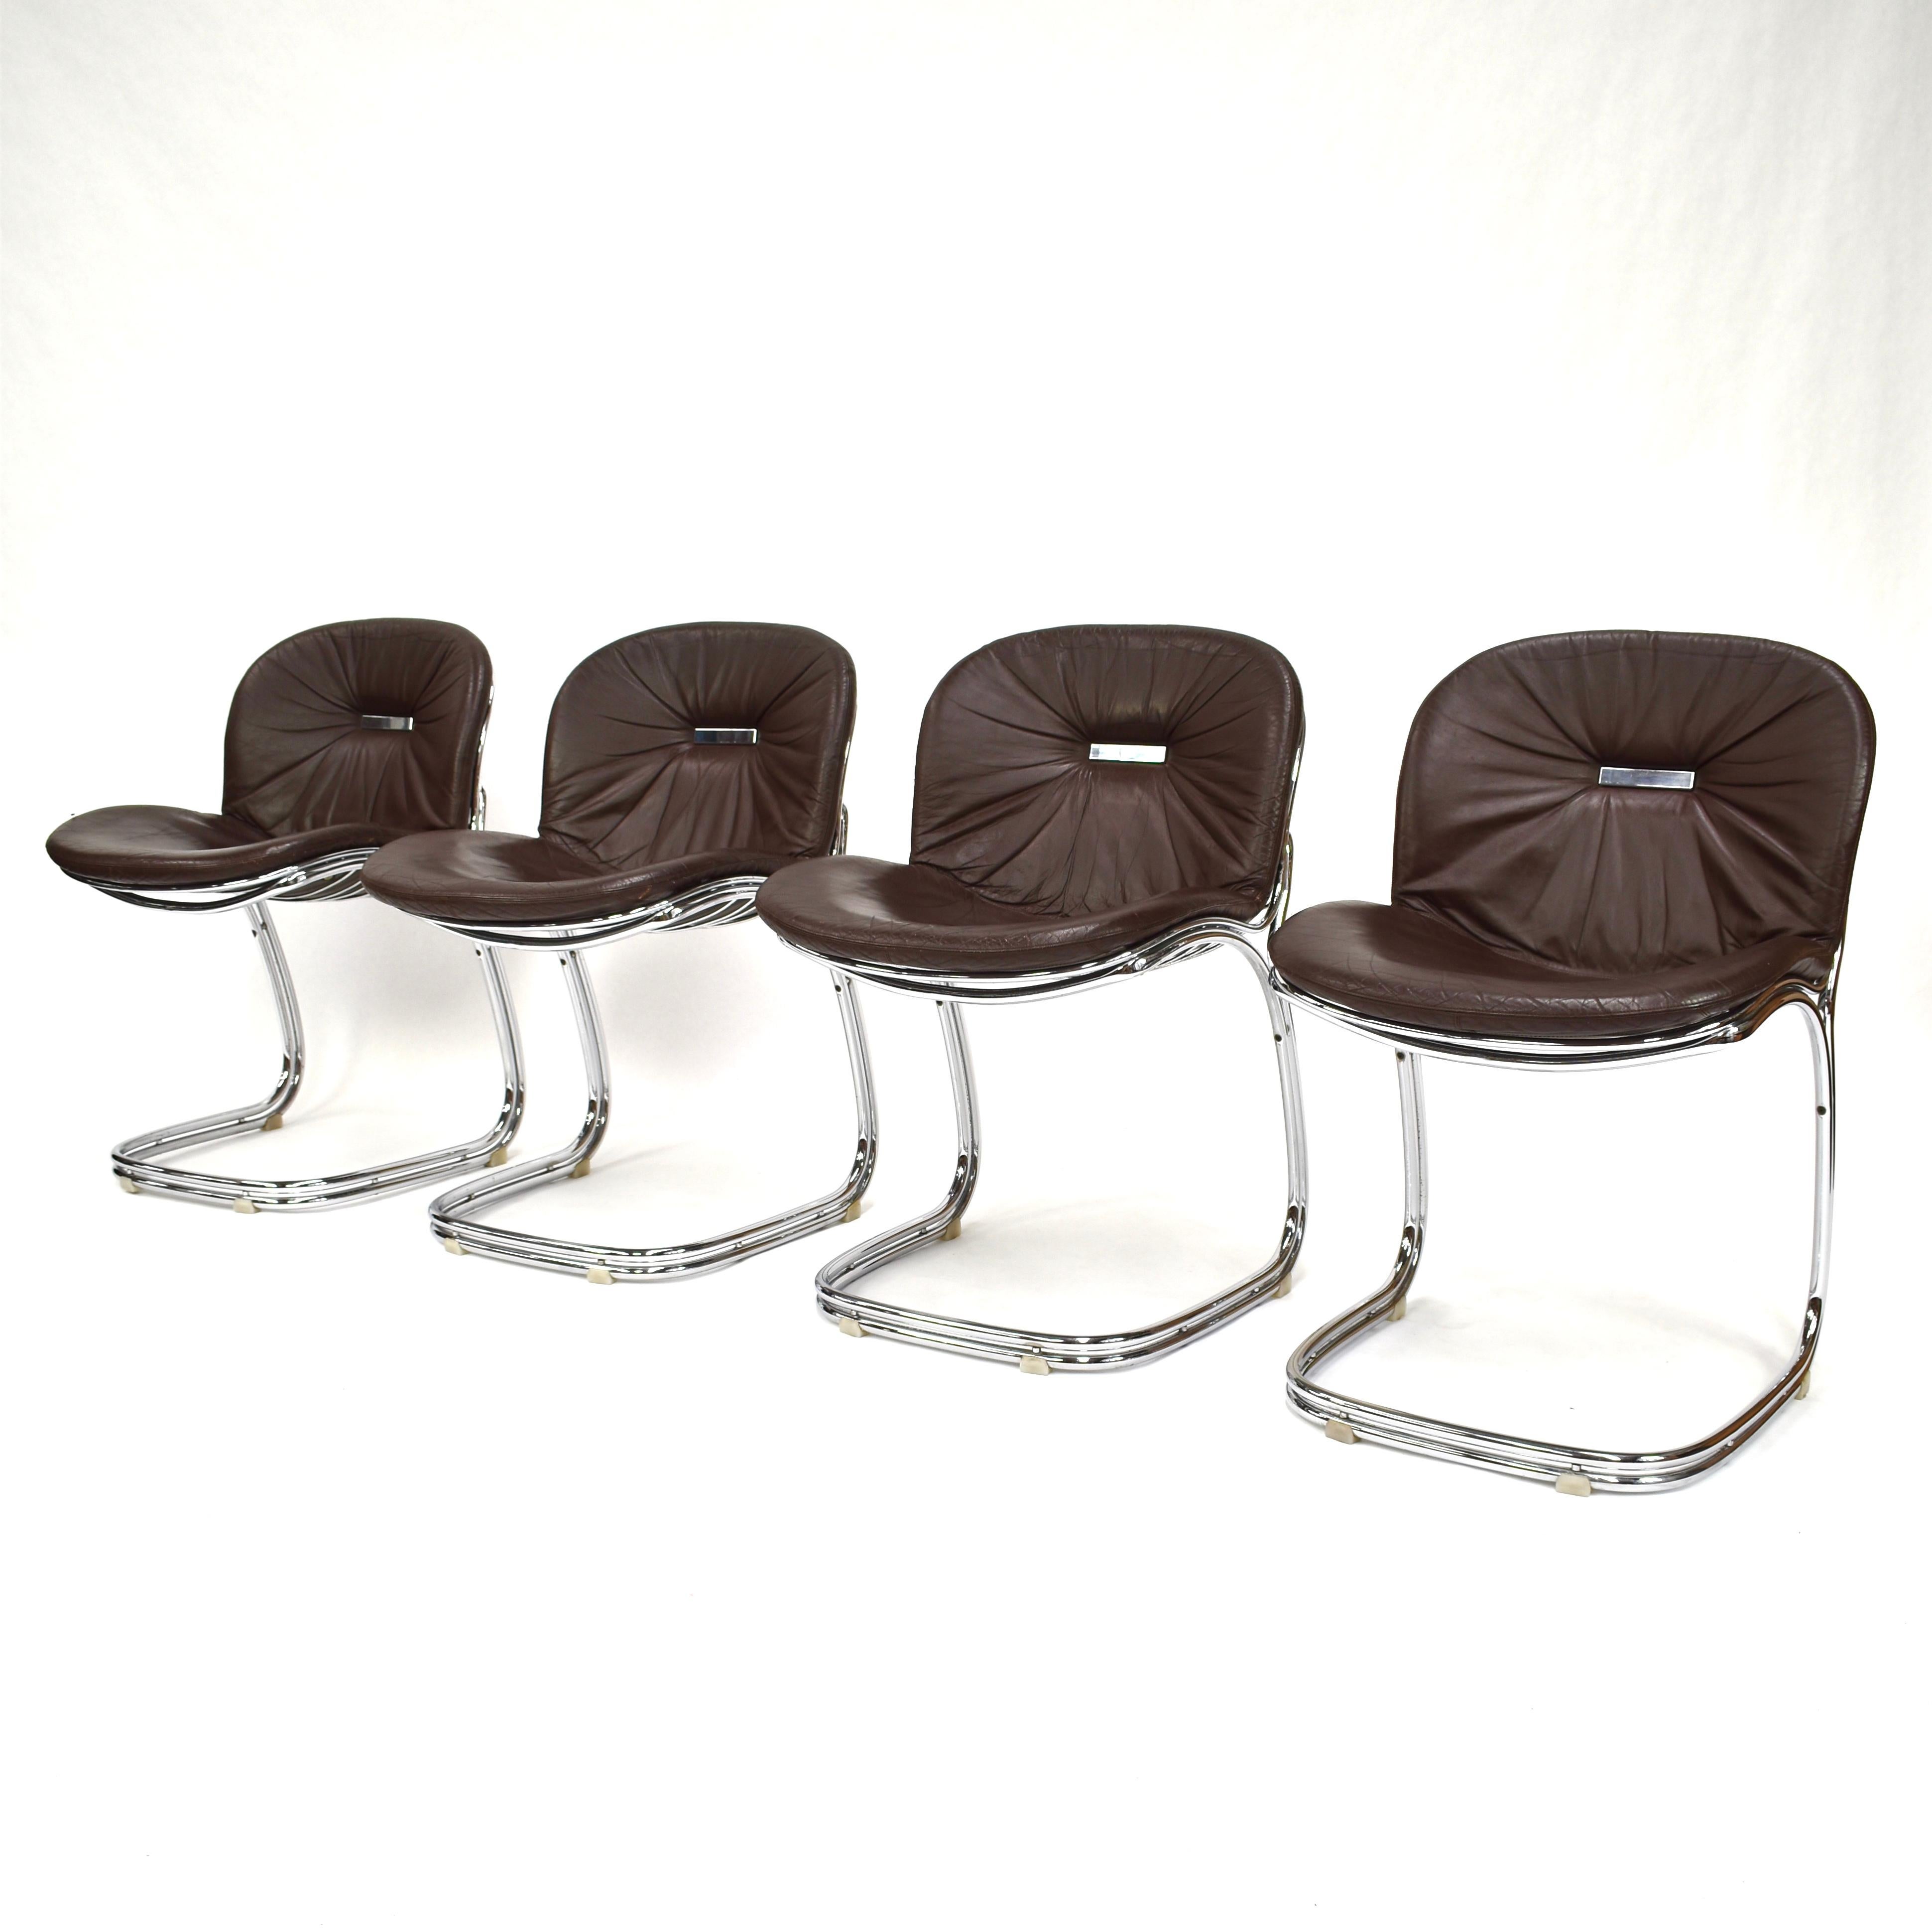 Italian Gastone Rinaldi 'Sabrina' Chocolate Brown Leather Chairs for RIMA, Italy